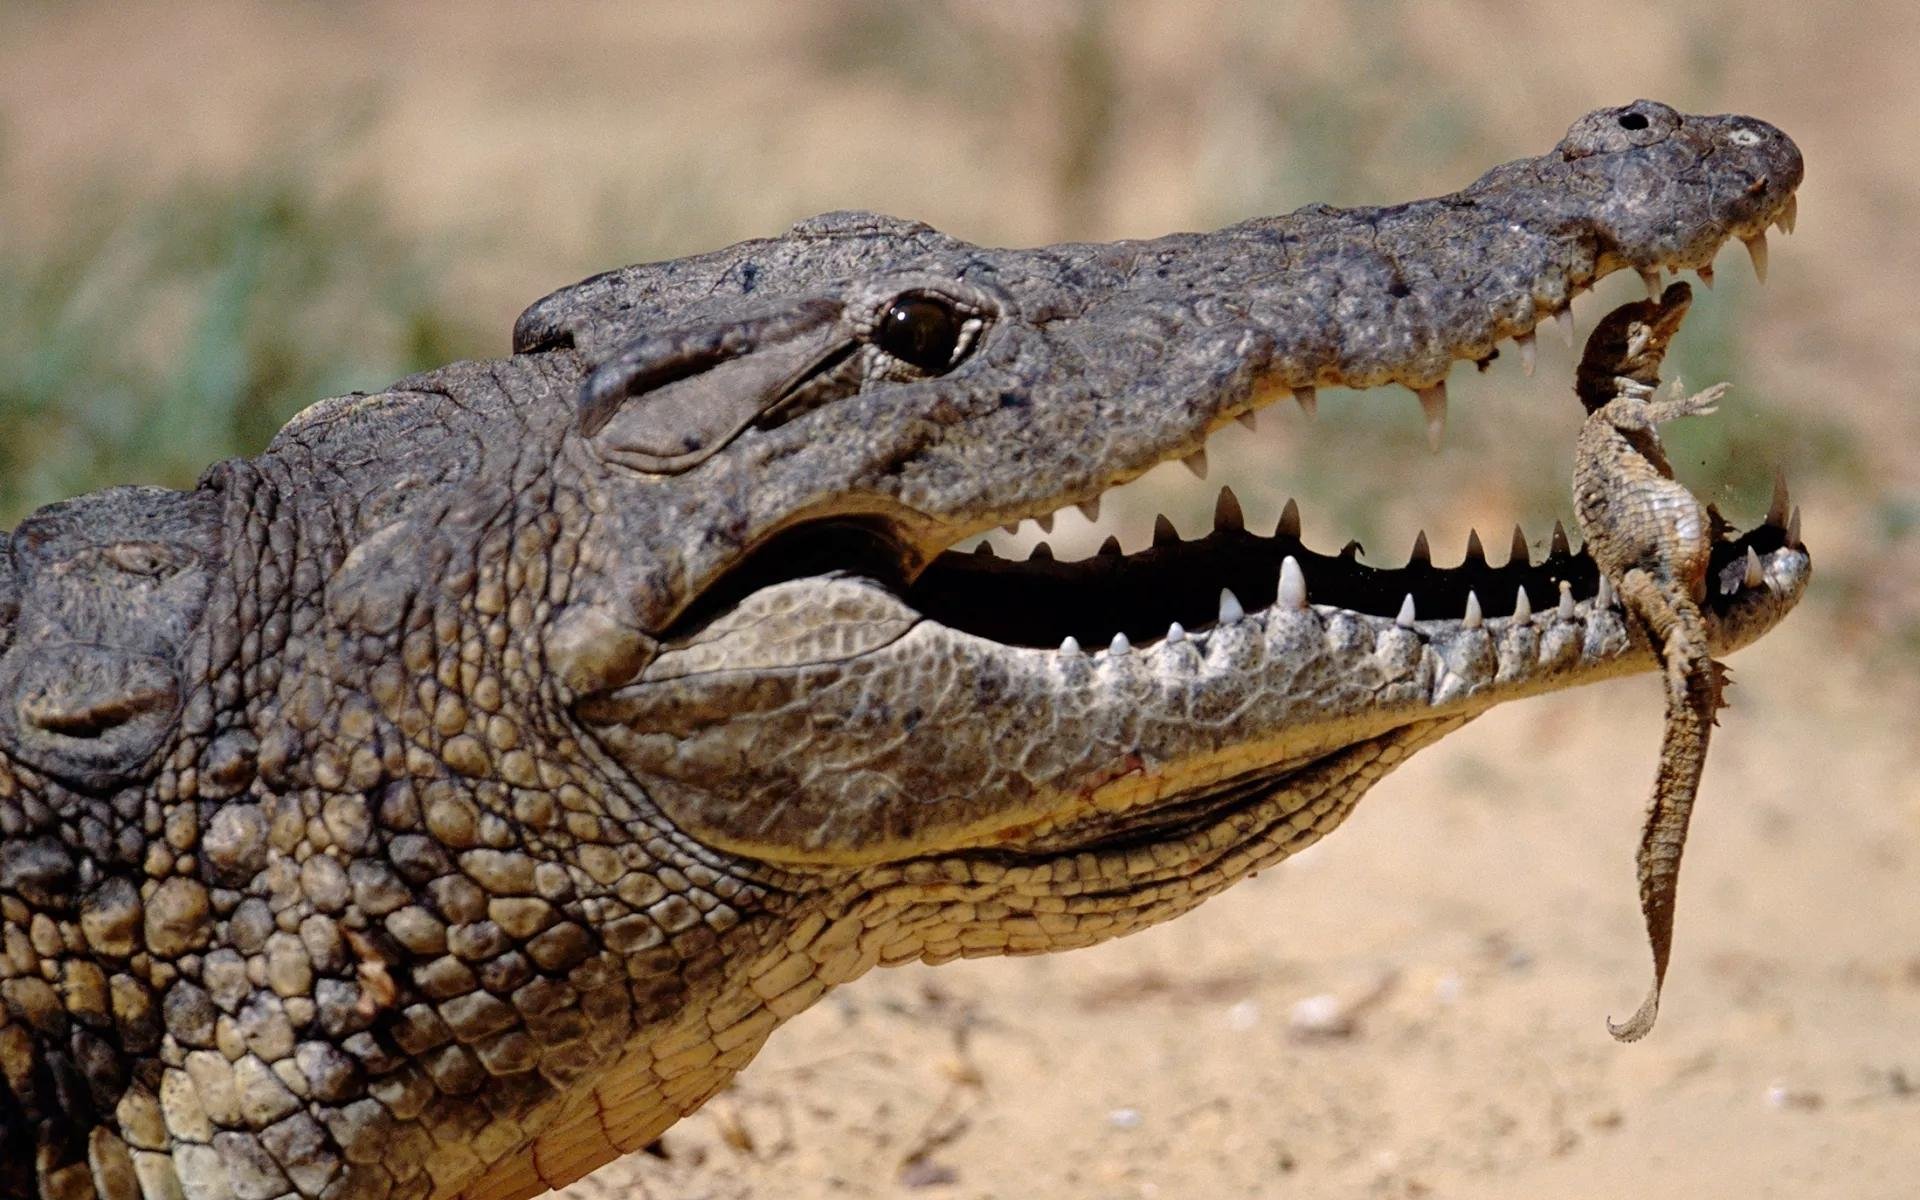 Croc Jaws More Sensitive Than Human Fingertips